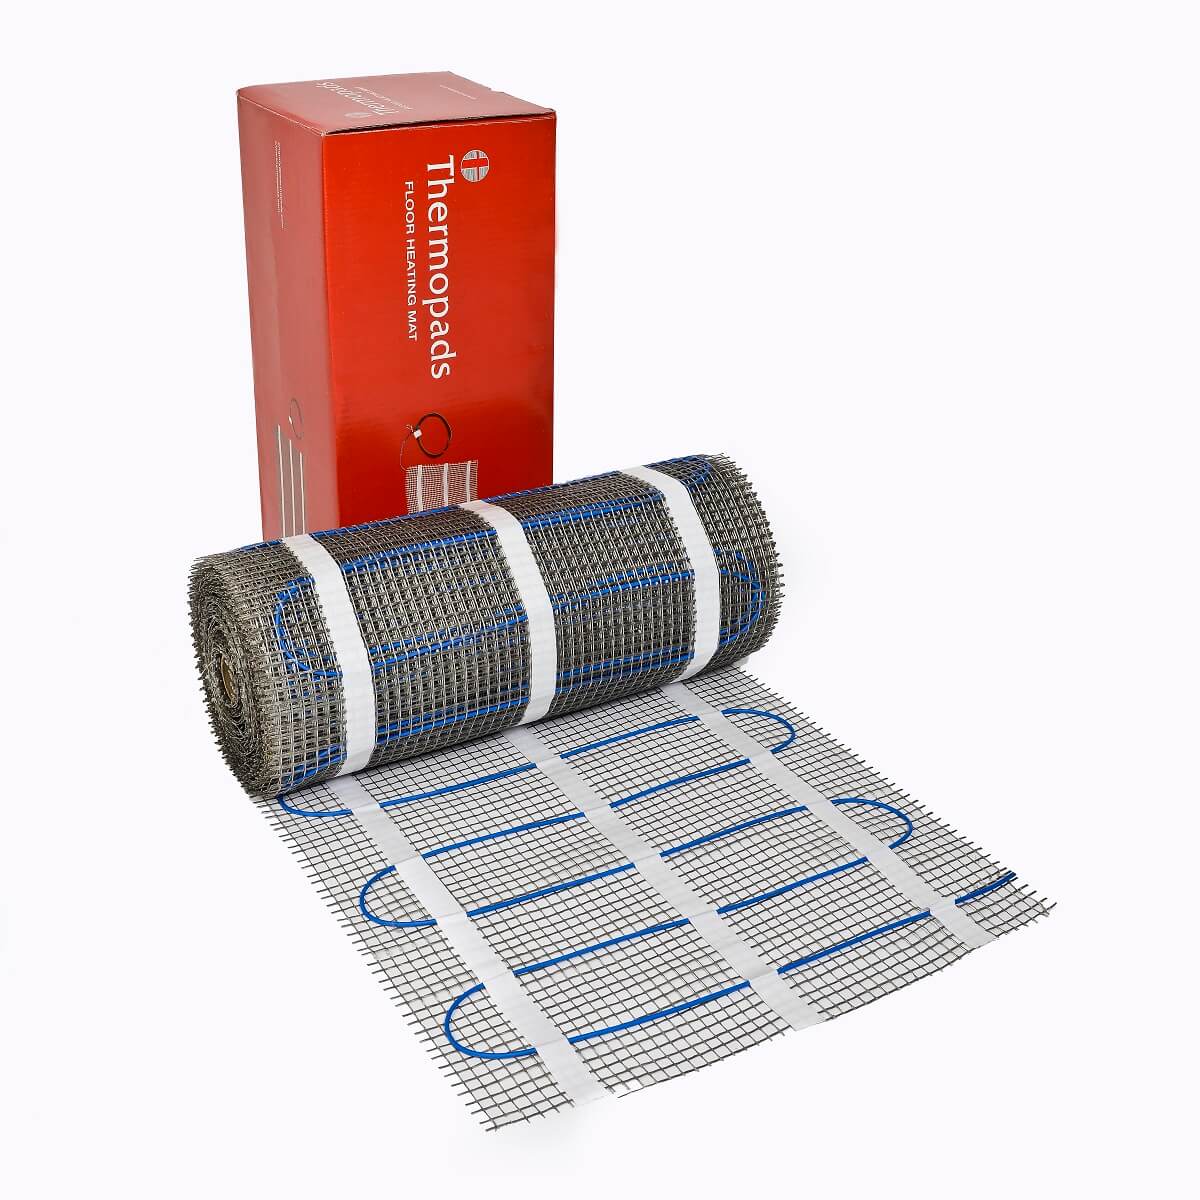 Thermopads Undertile Heating Mat - 2m2 400W (11173)